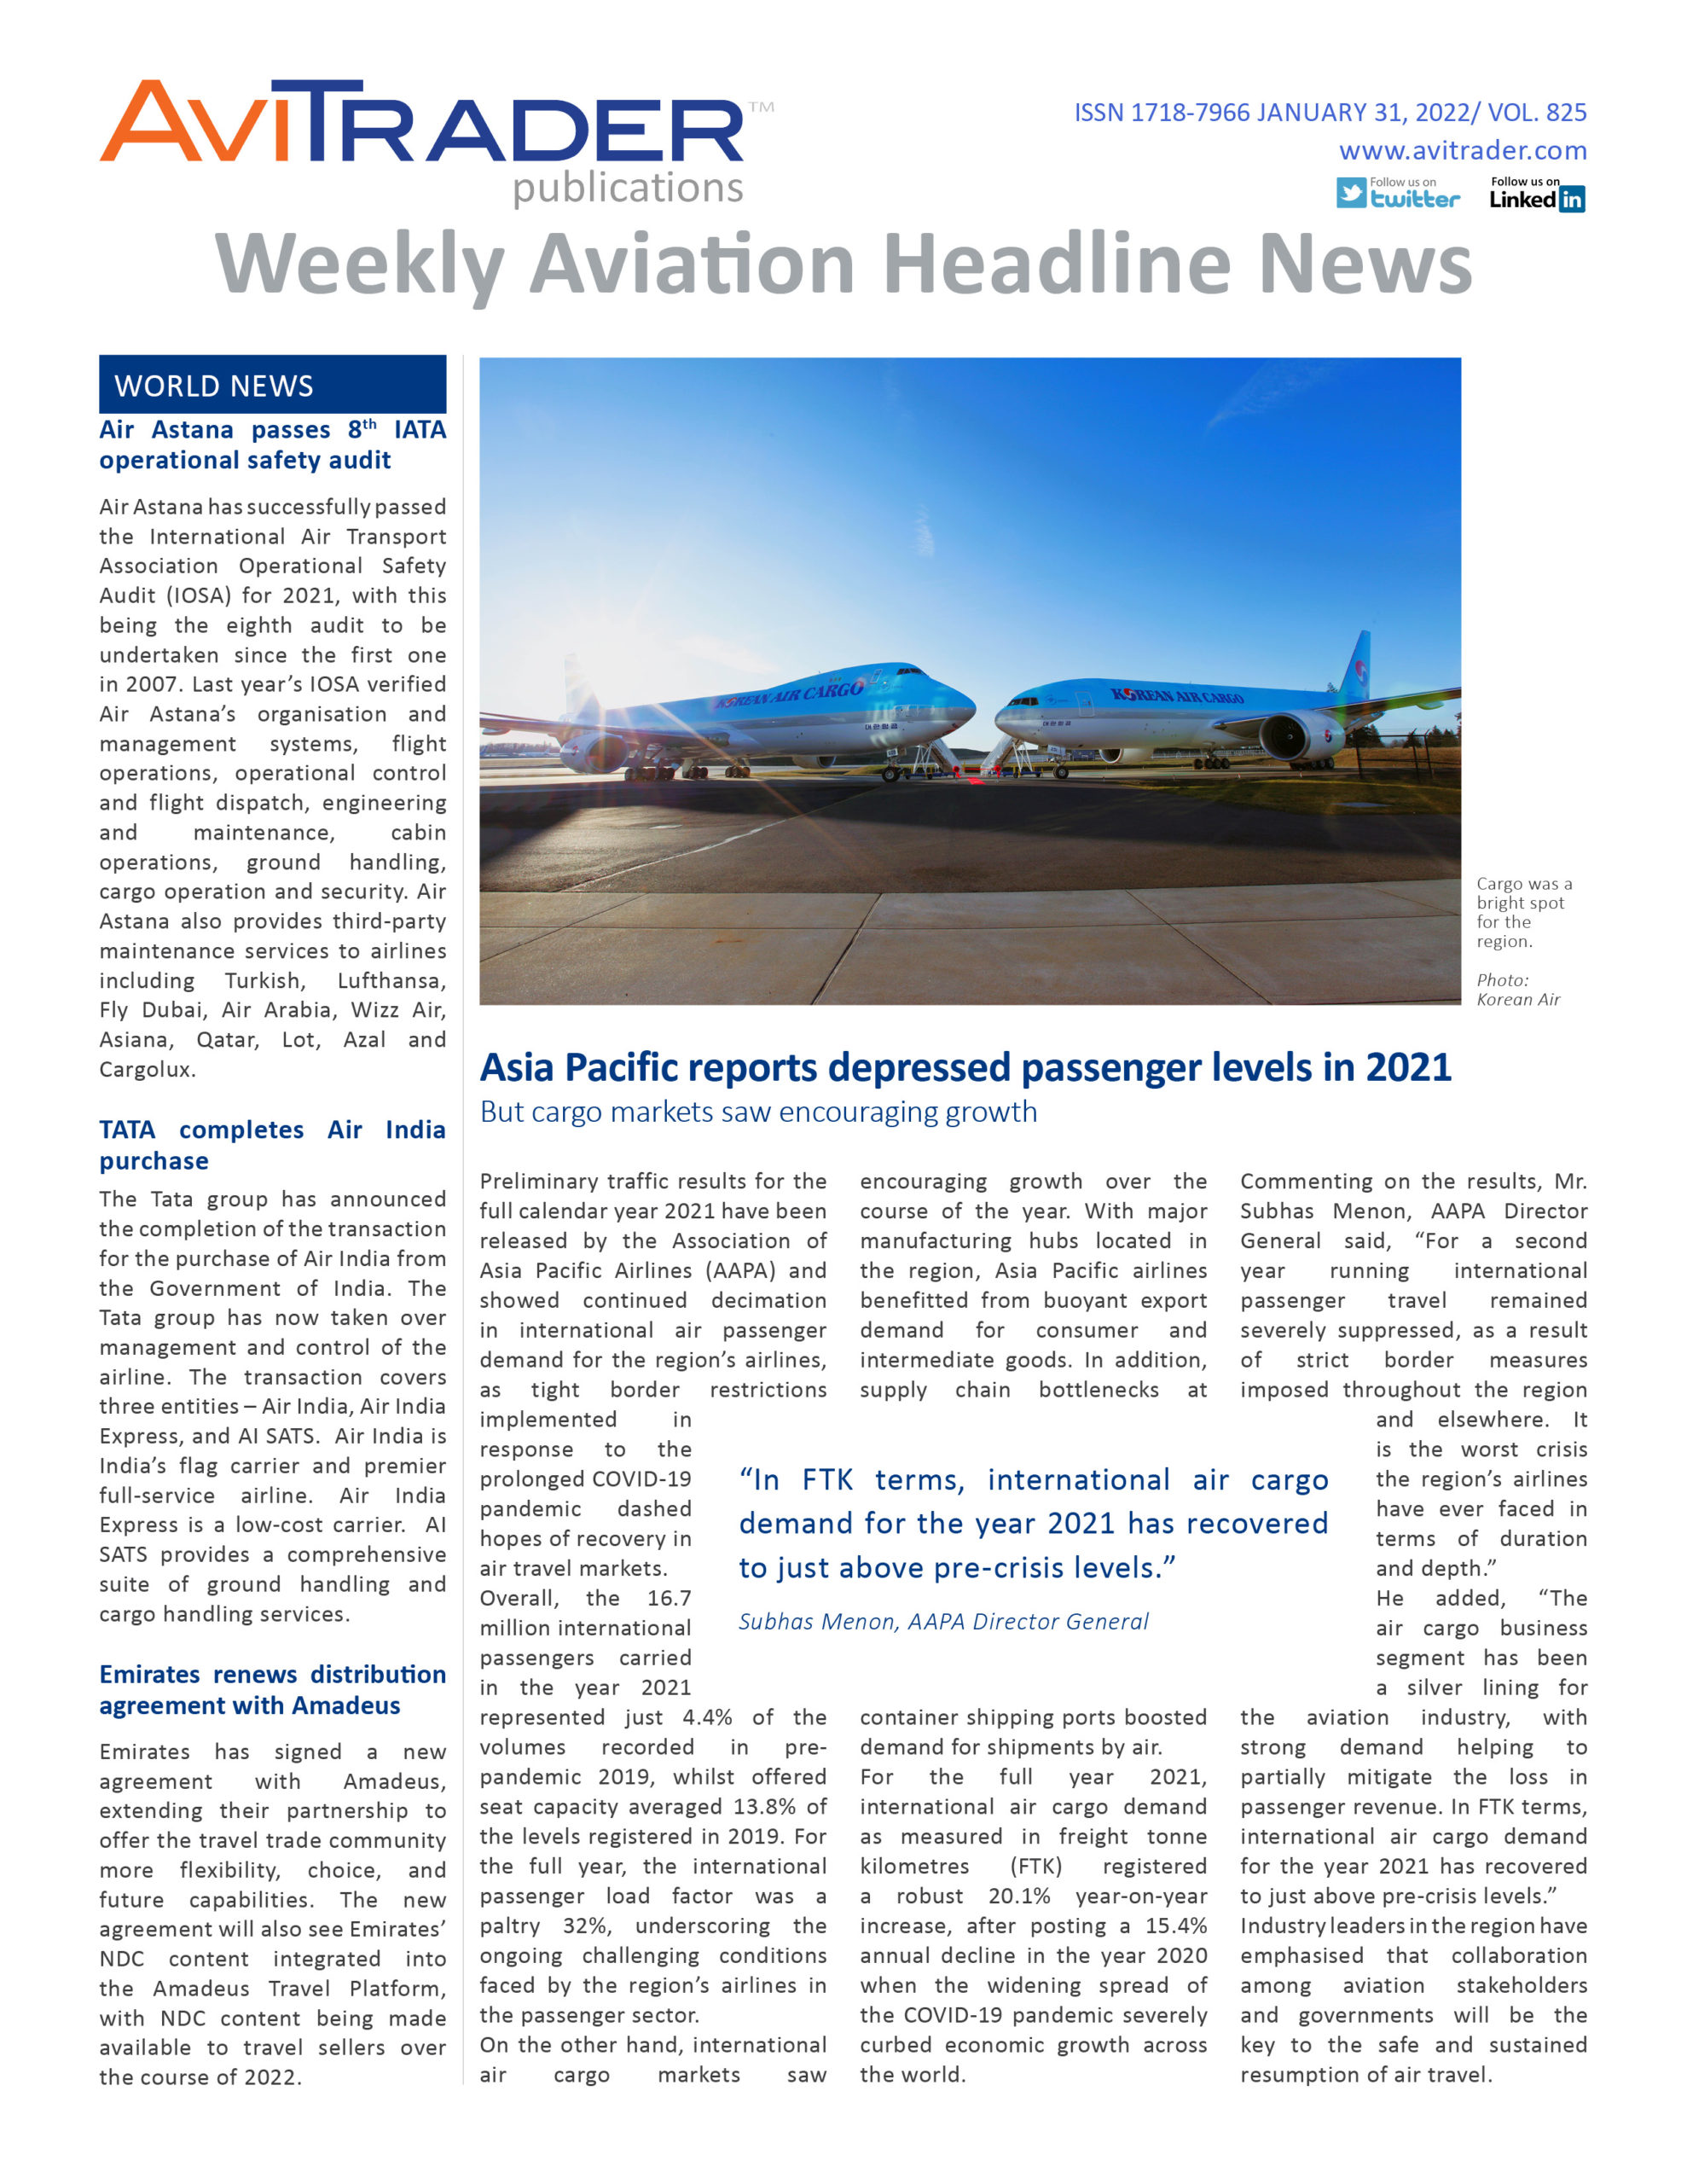 AviTrader_Weekly_Headline_News_Cover_2022-01-31